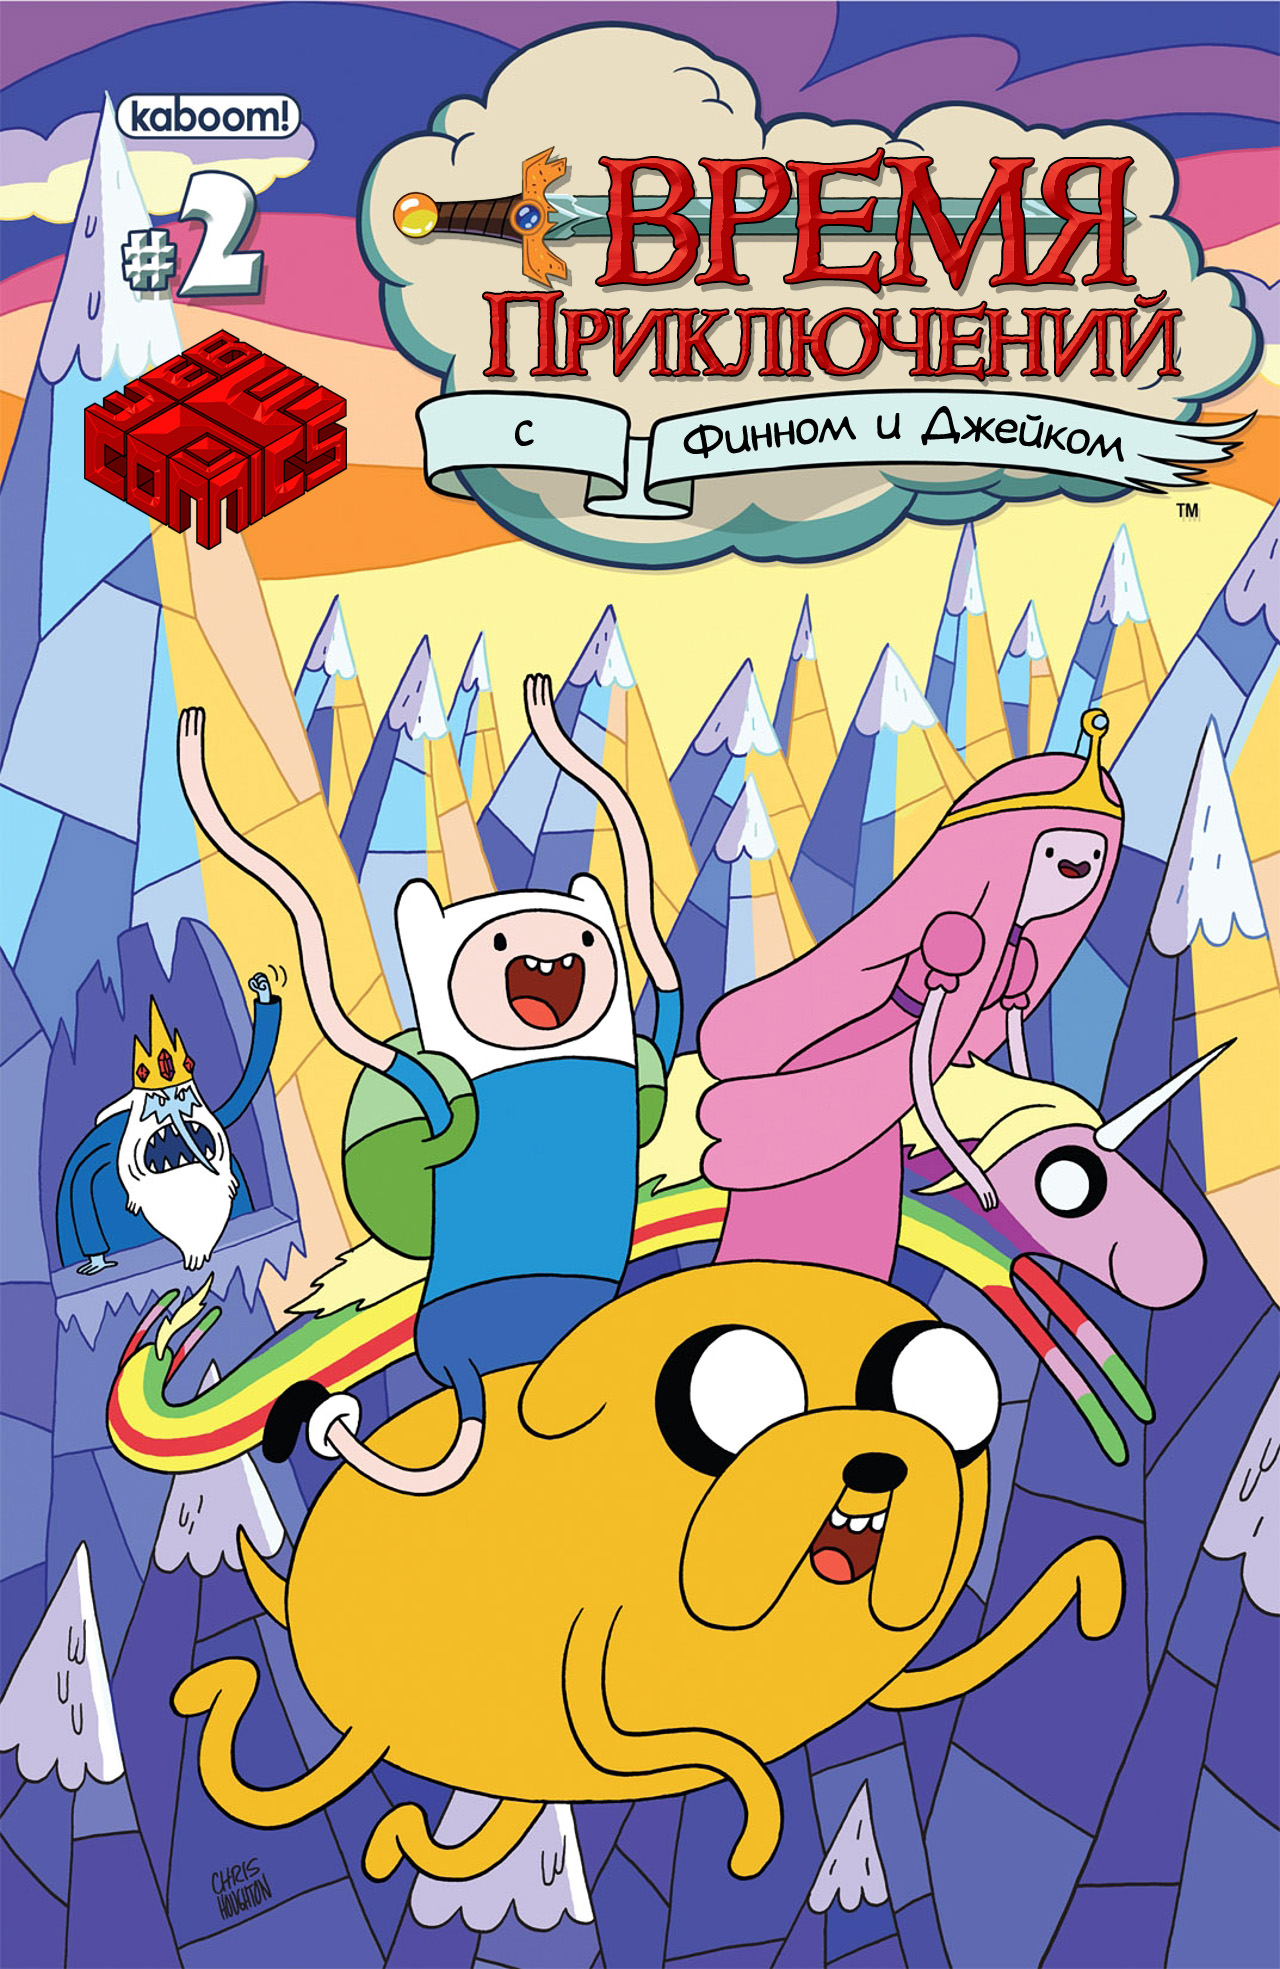 Мир приключений новинки. Adventure time фин и Джейк. Комиксы адвентуре тайм.